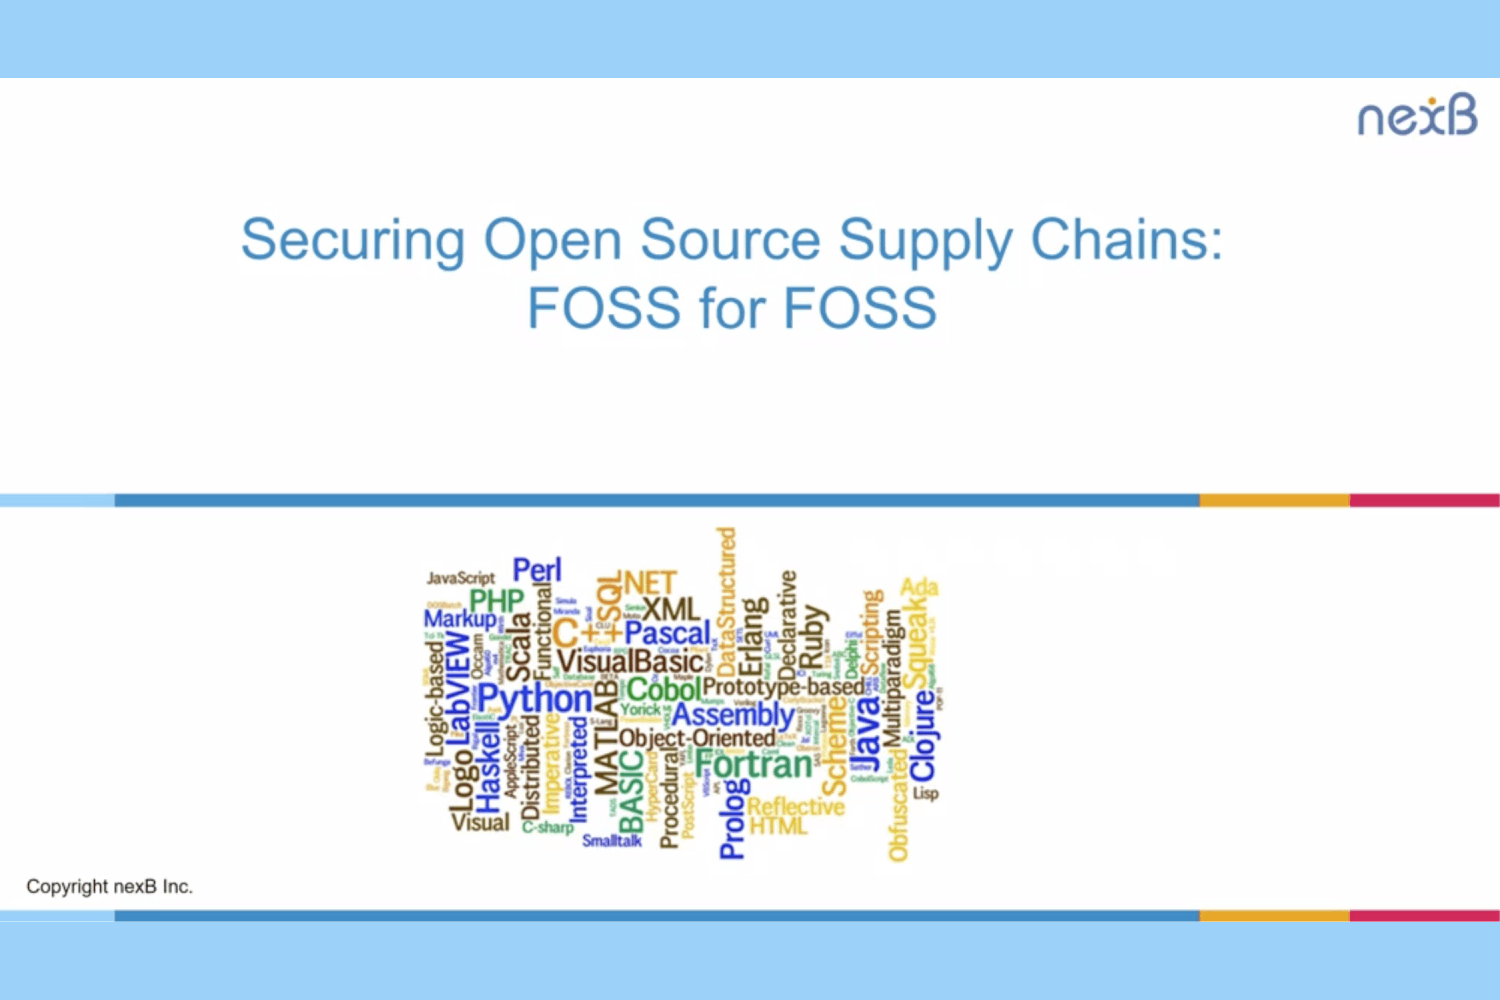 FOSS for FOSS featured graphics